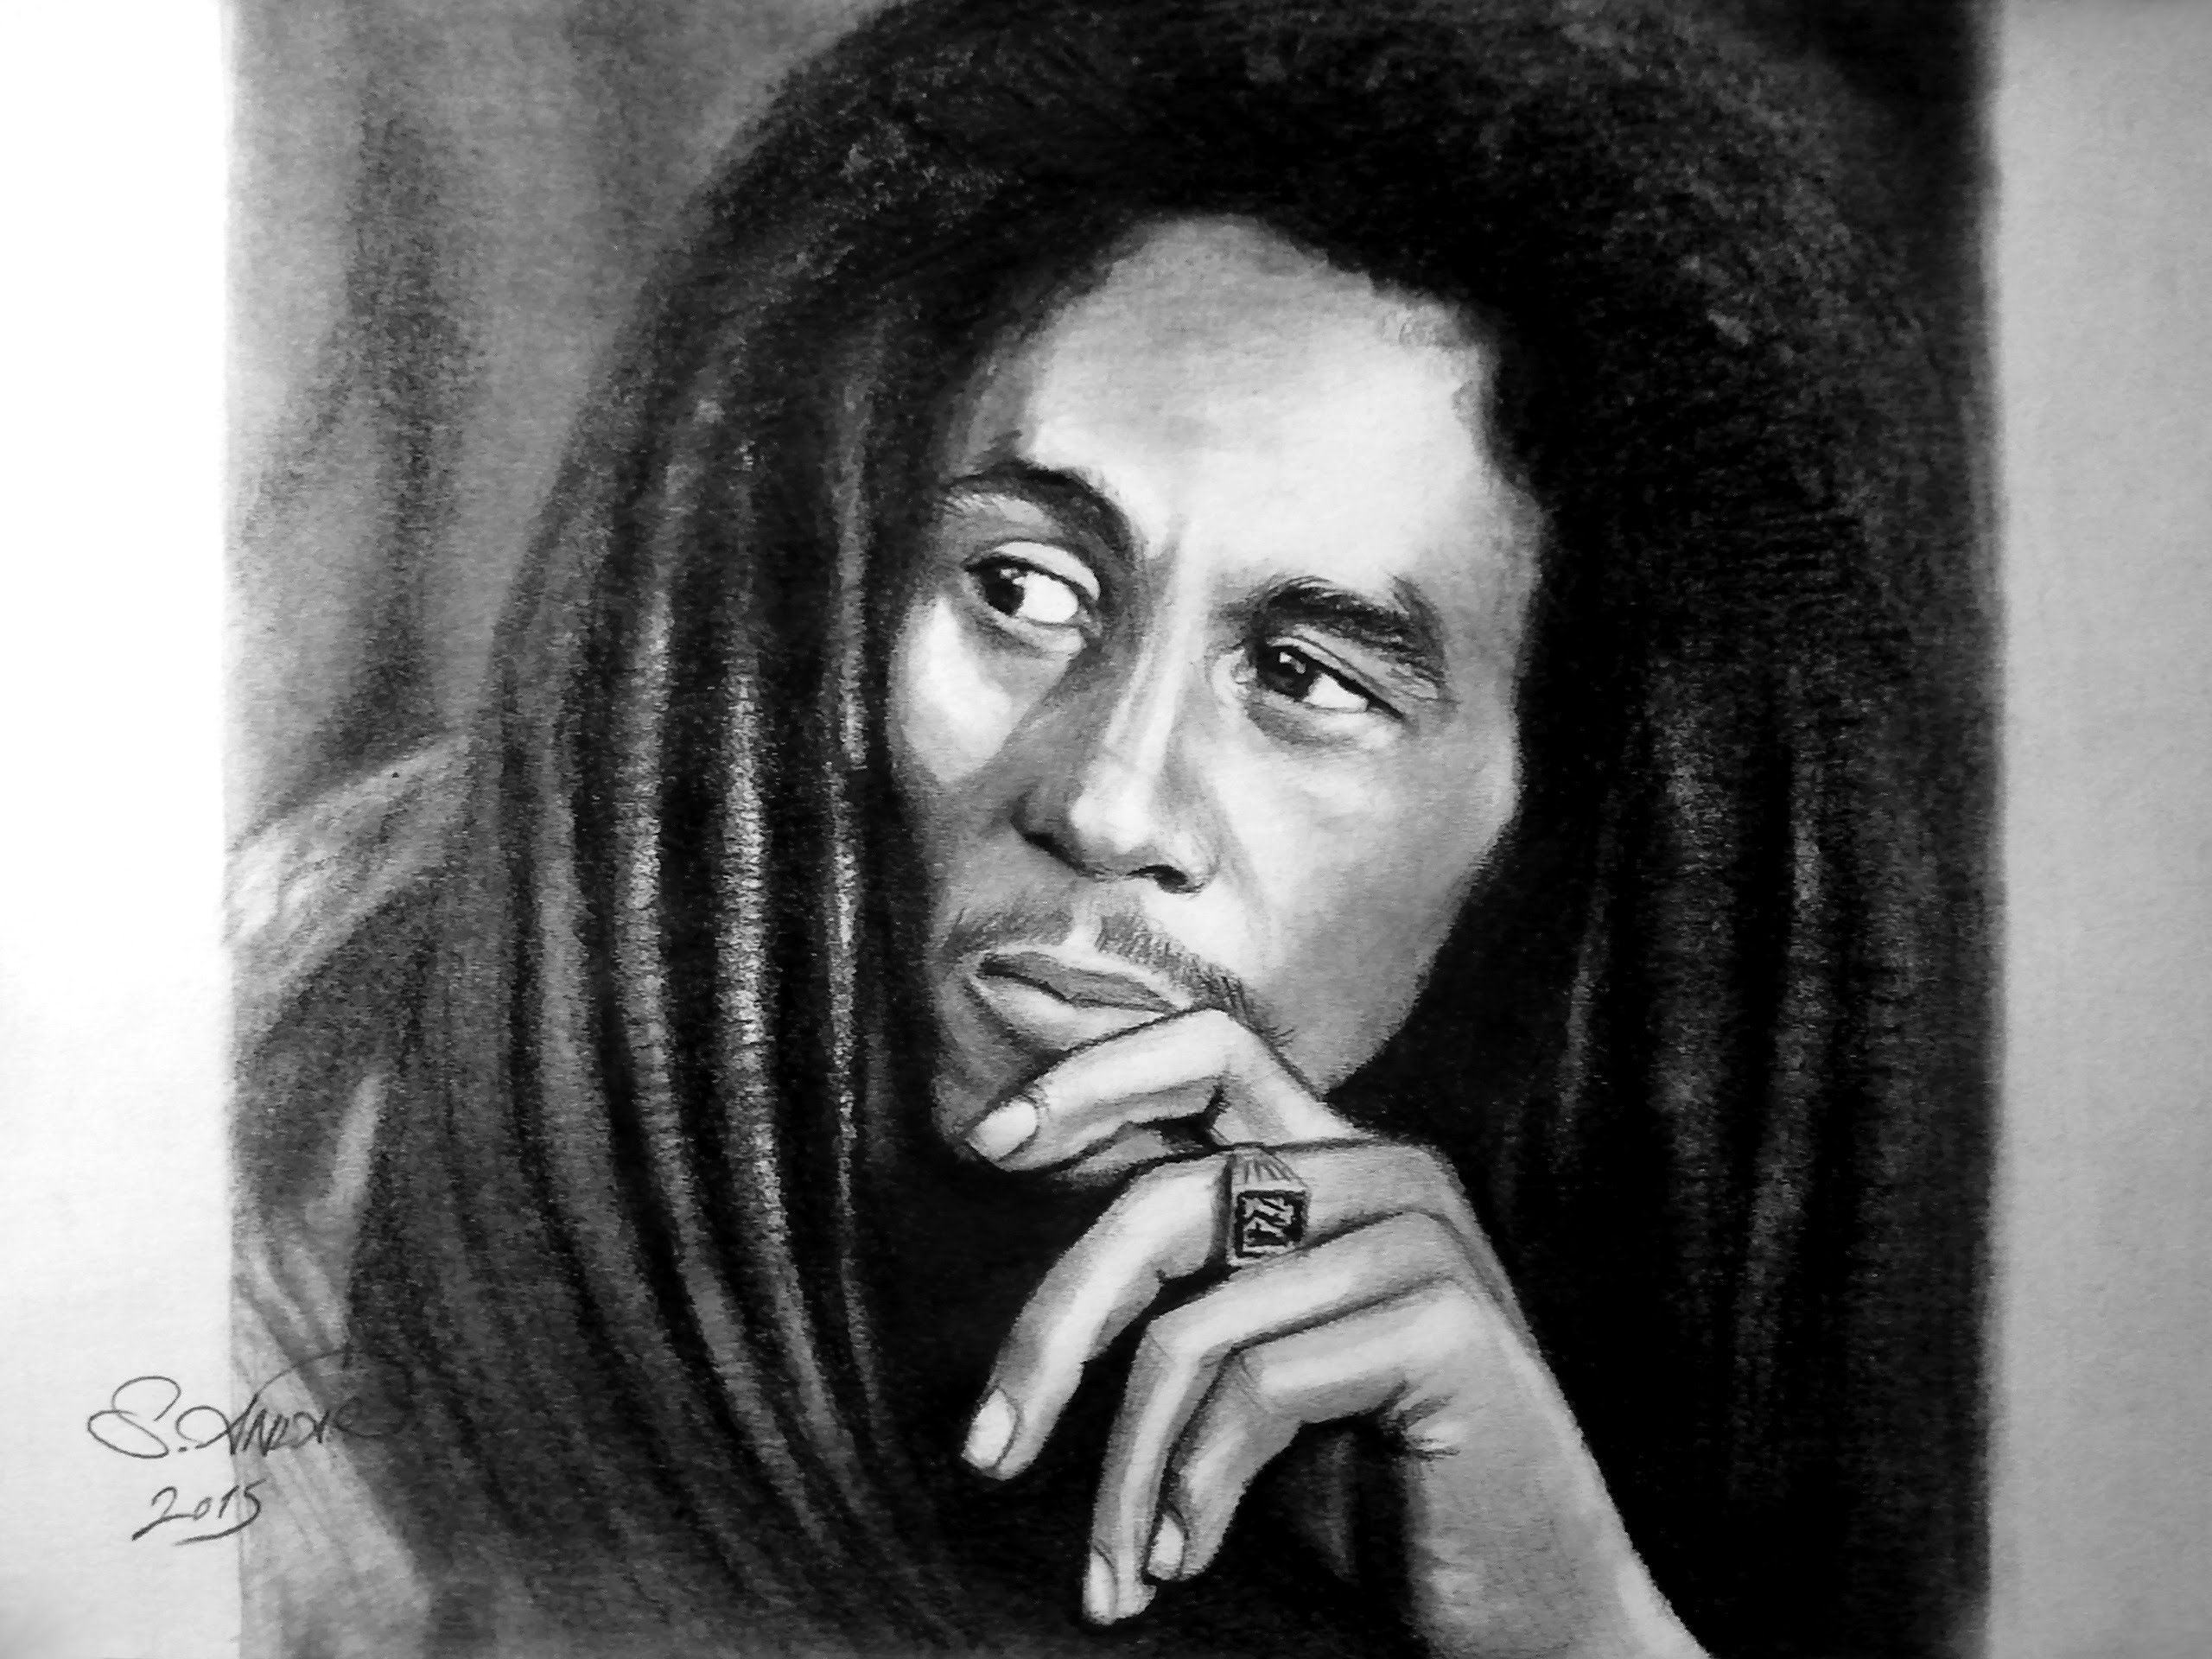 Bob Marley Sketch at Explore collection of Bob